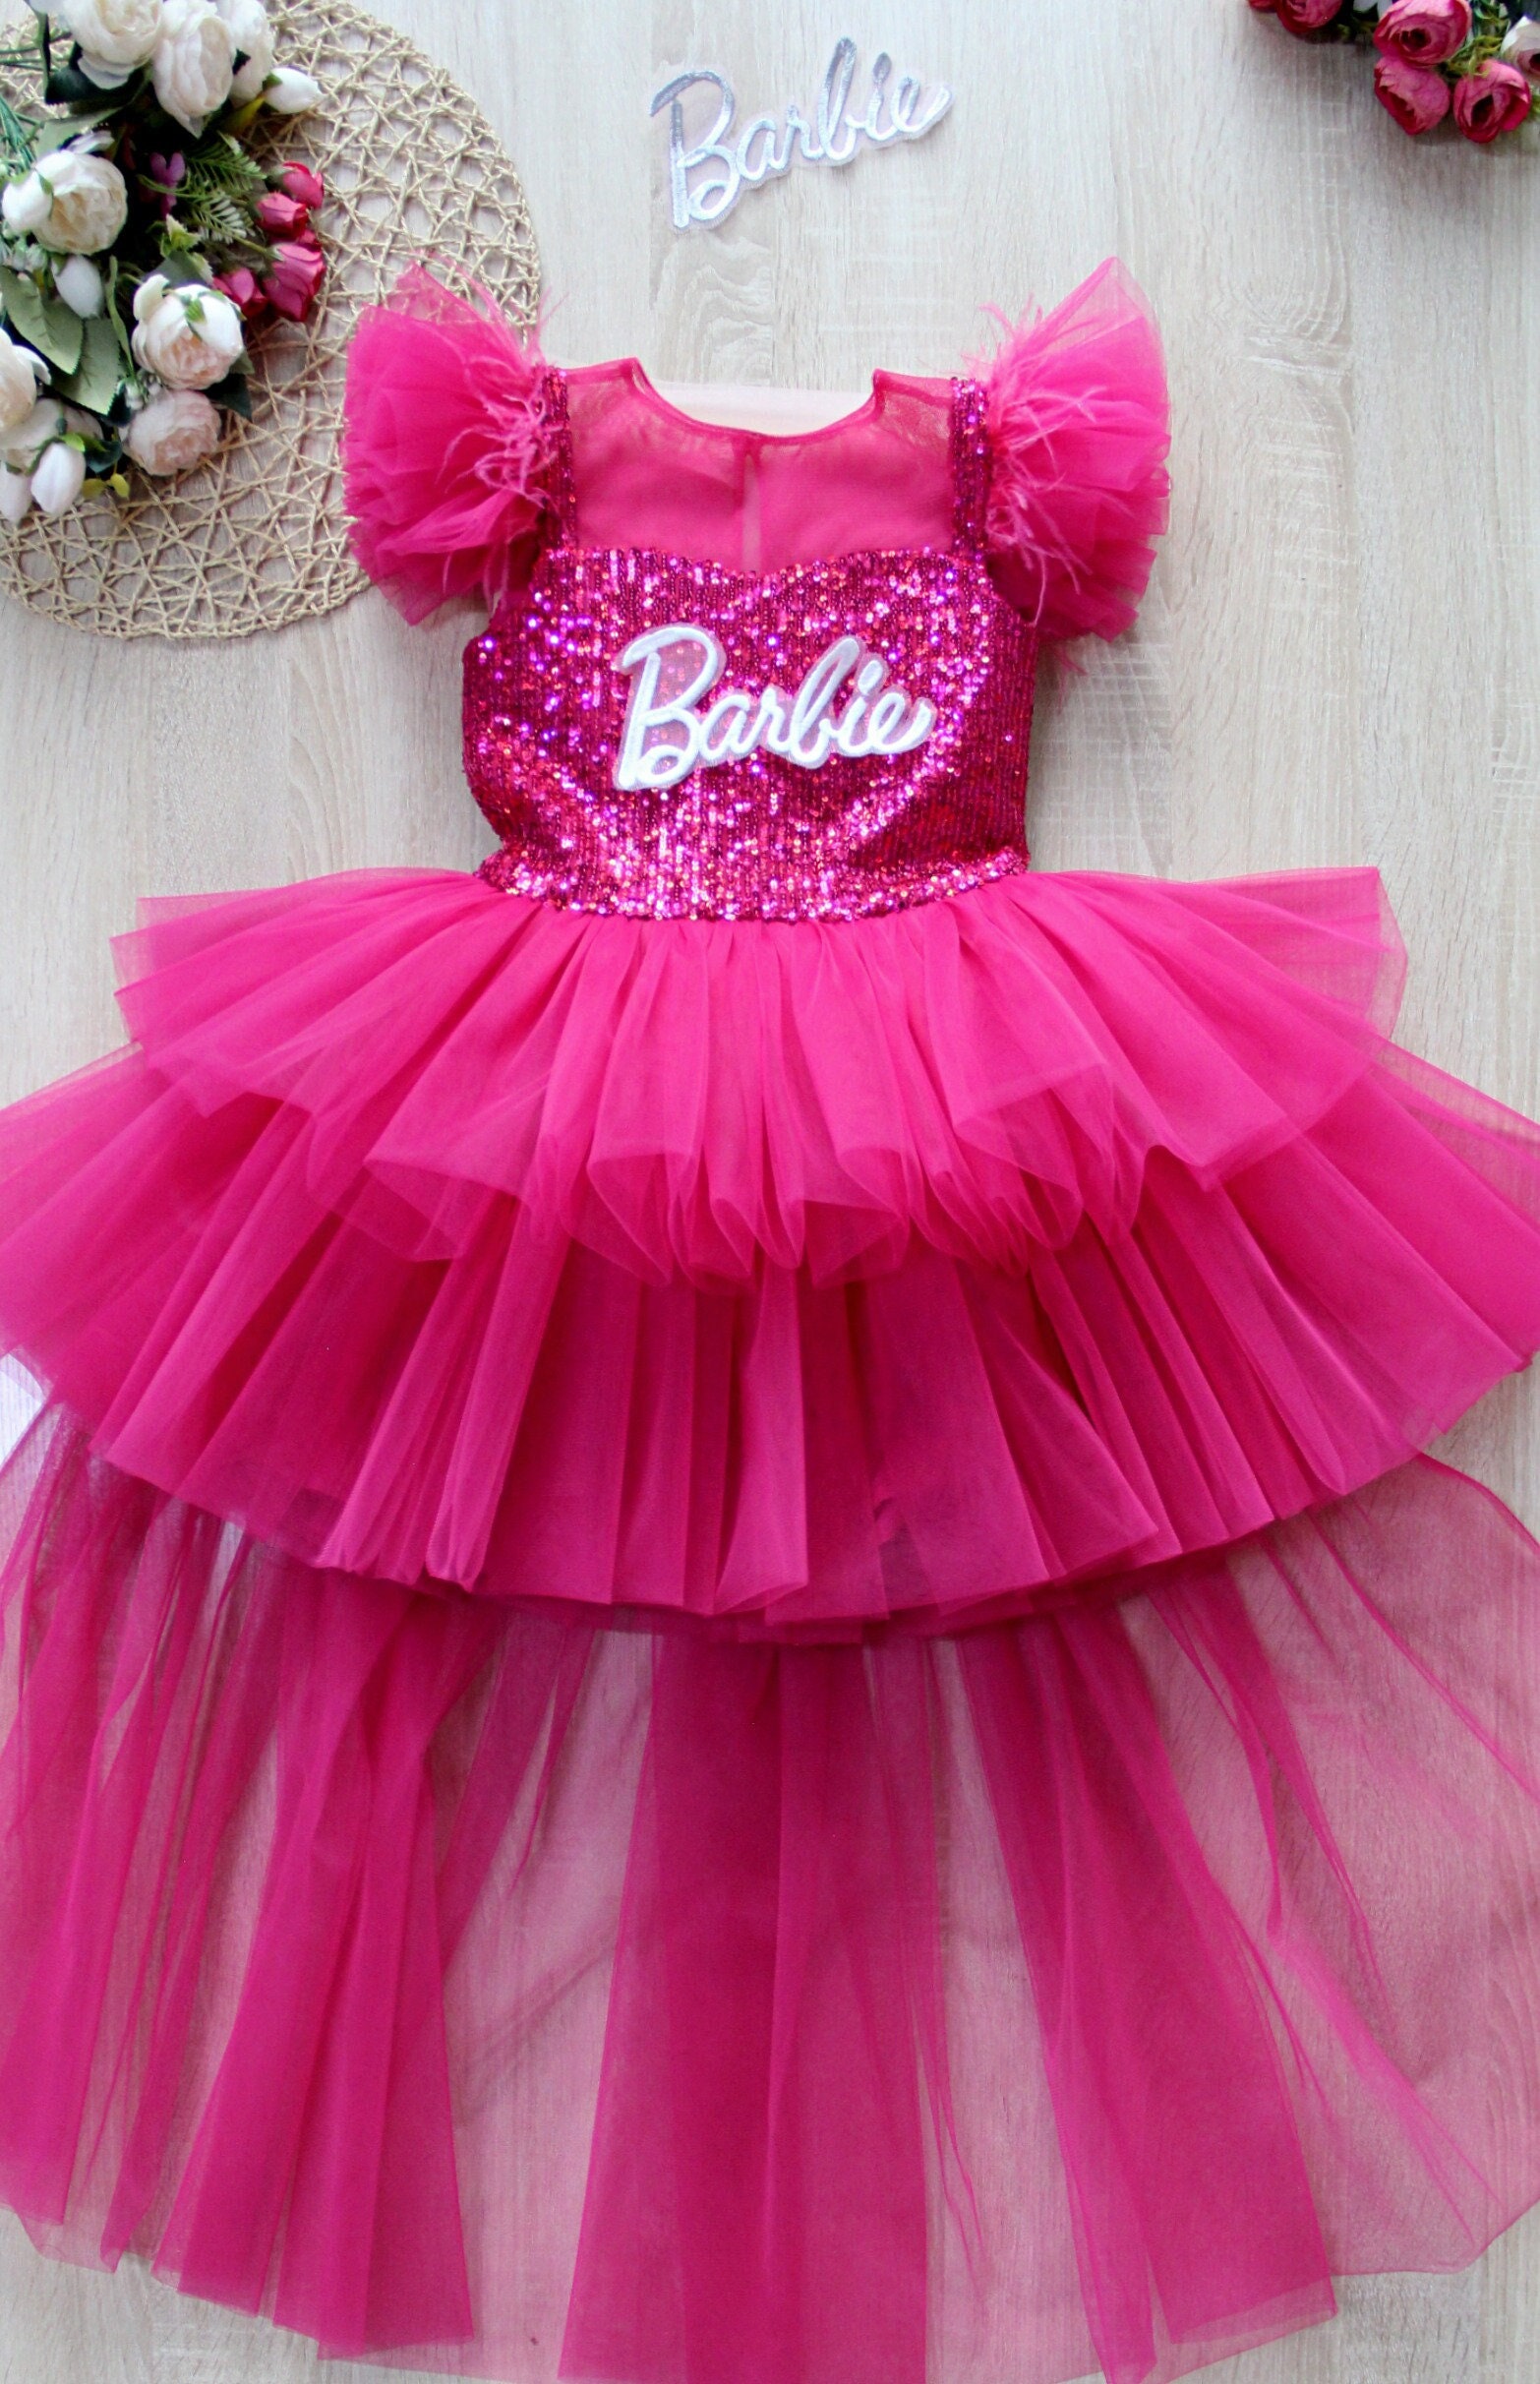 Barbie Dress Toddler Etsy